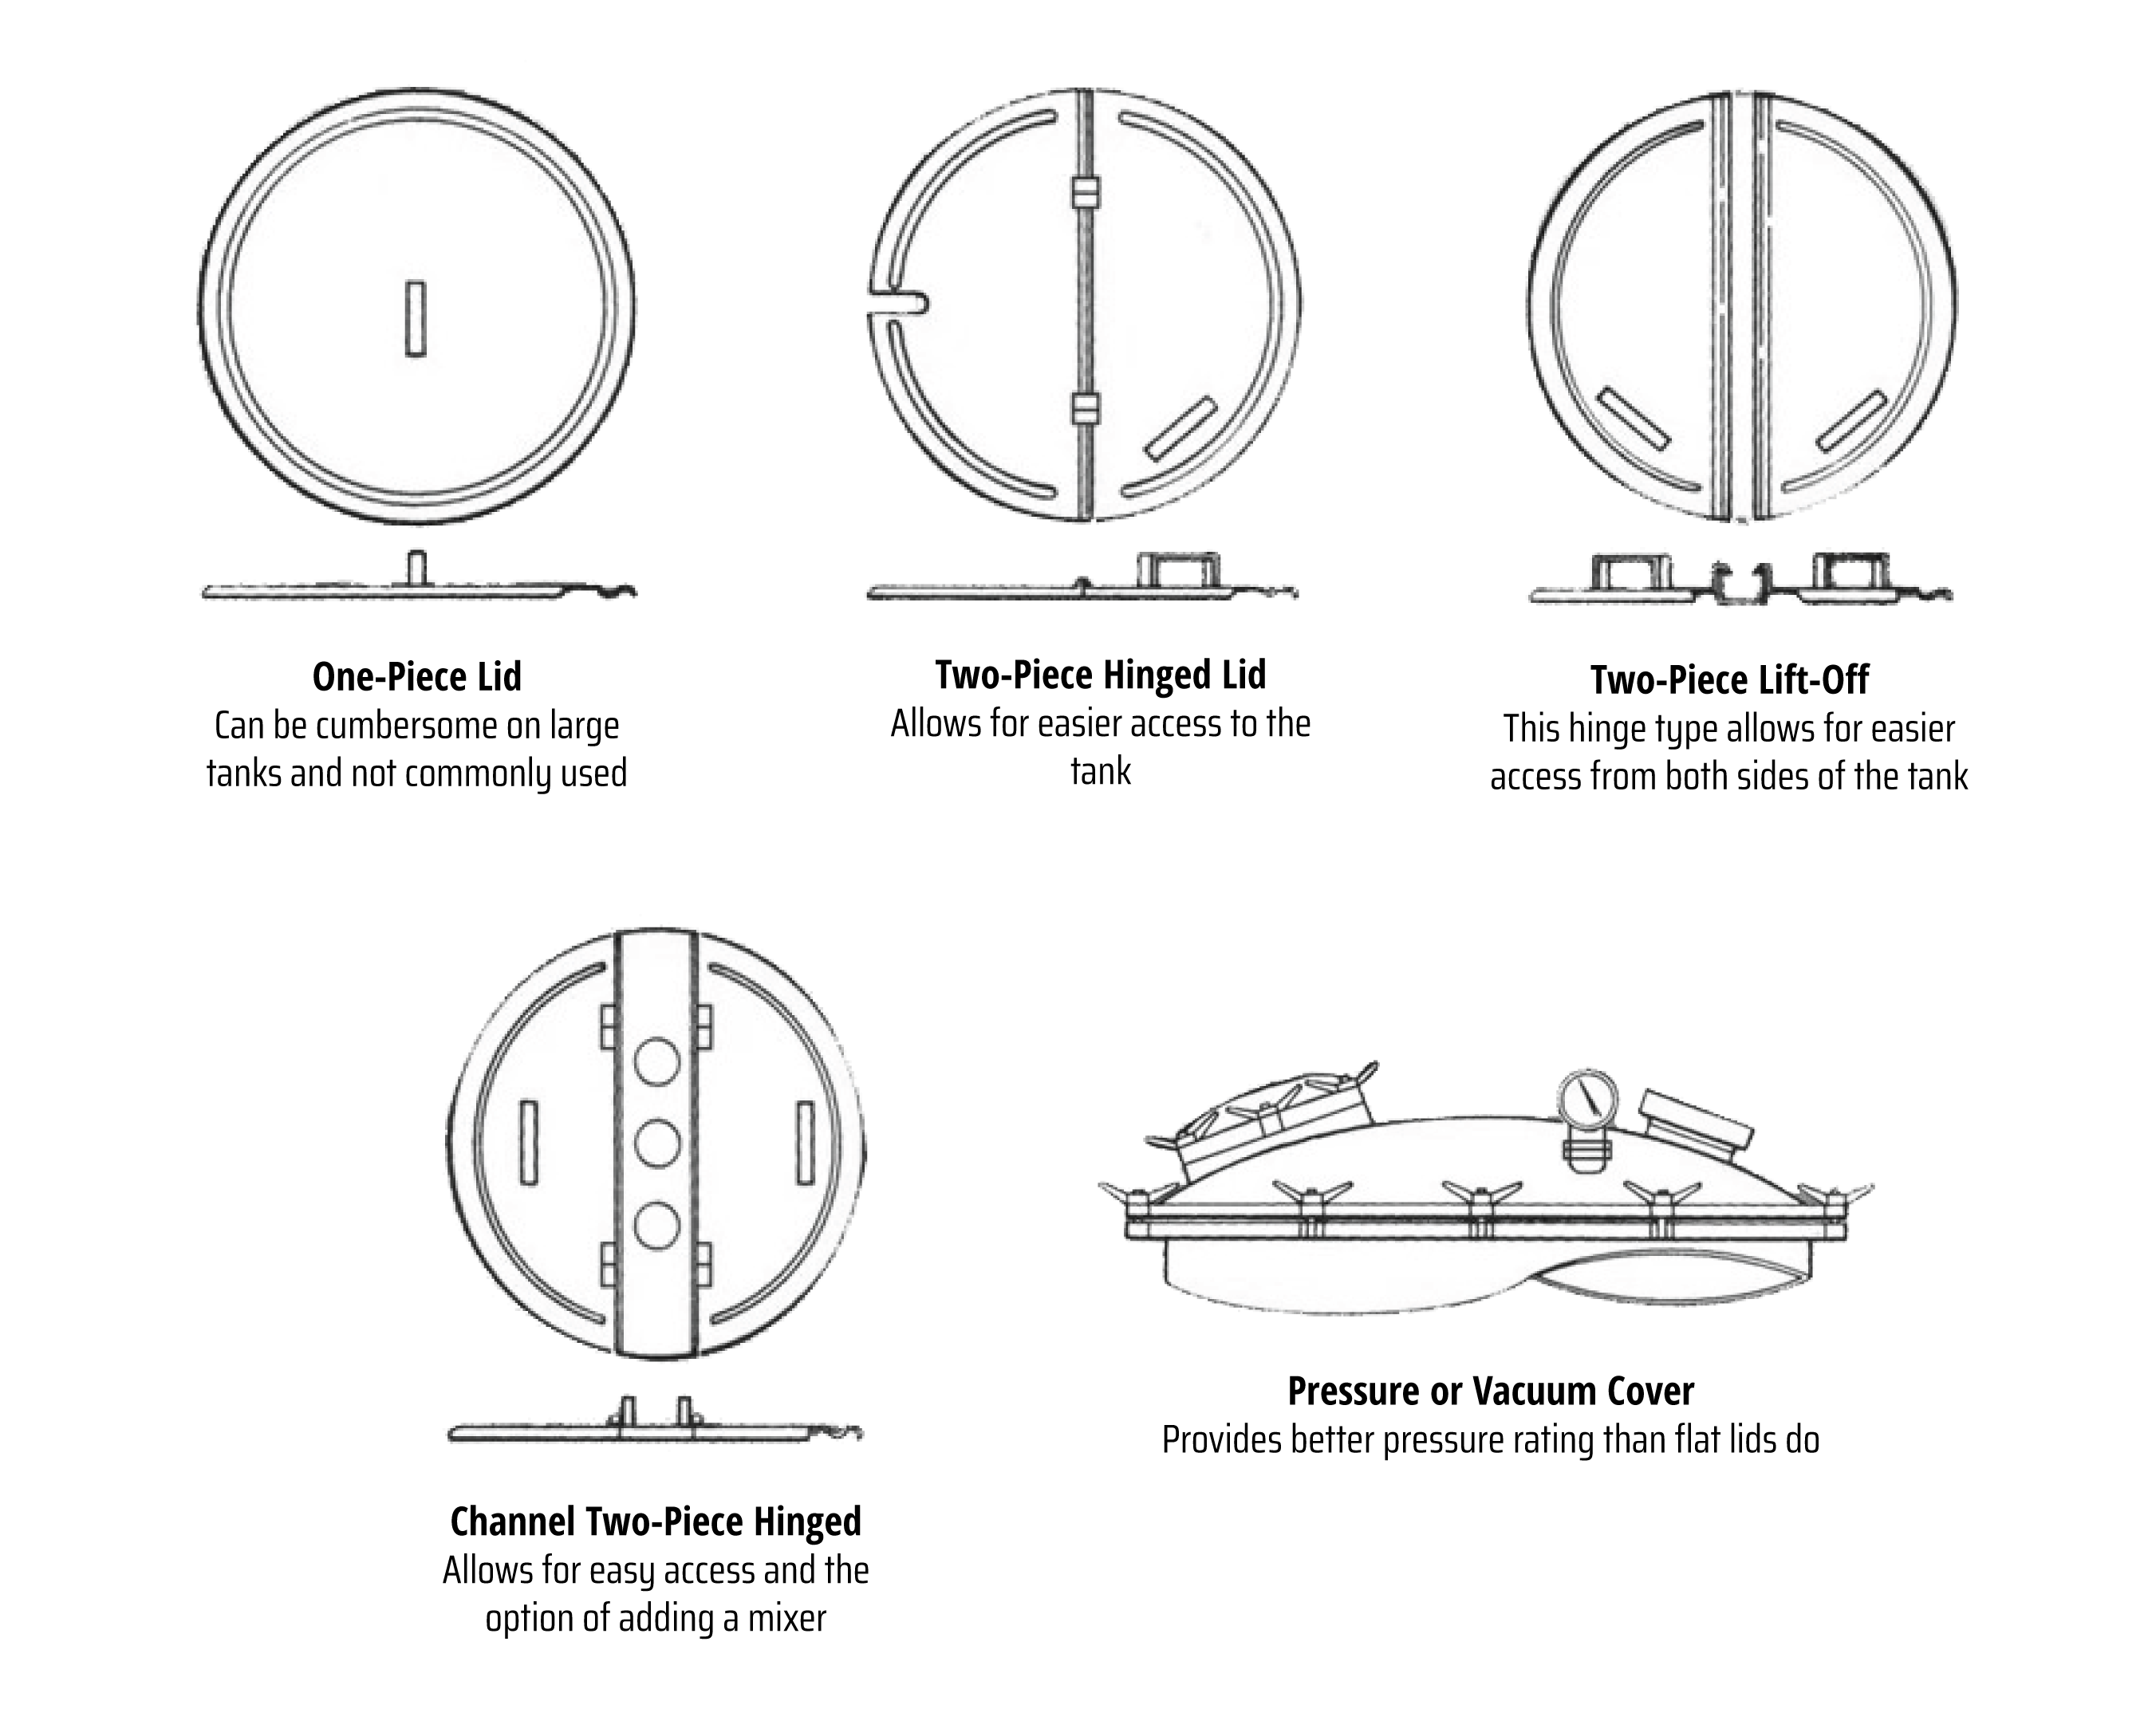 Types of Round Tank lids